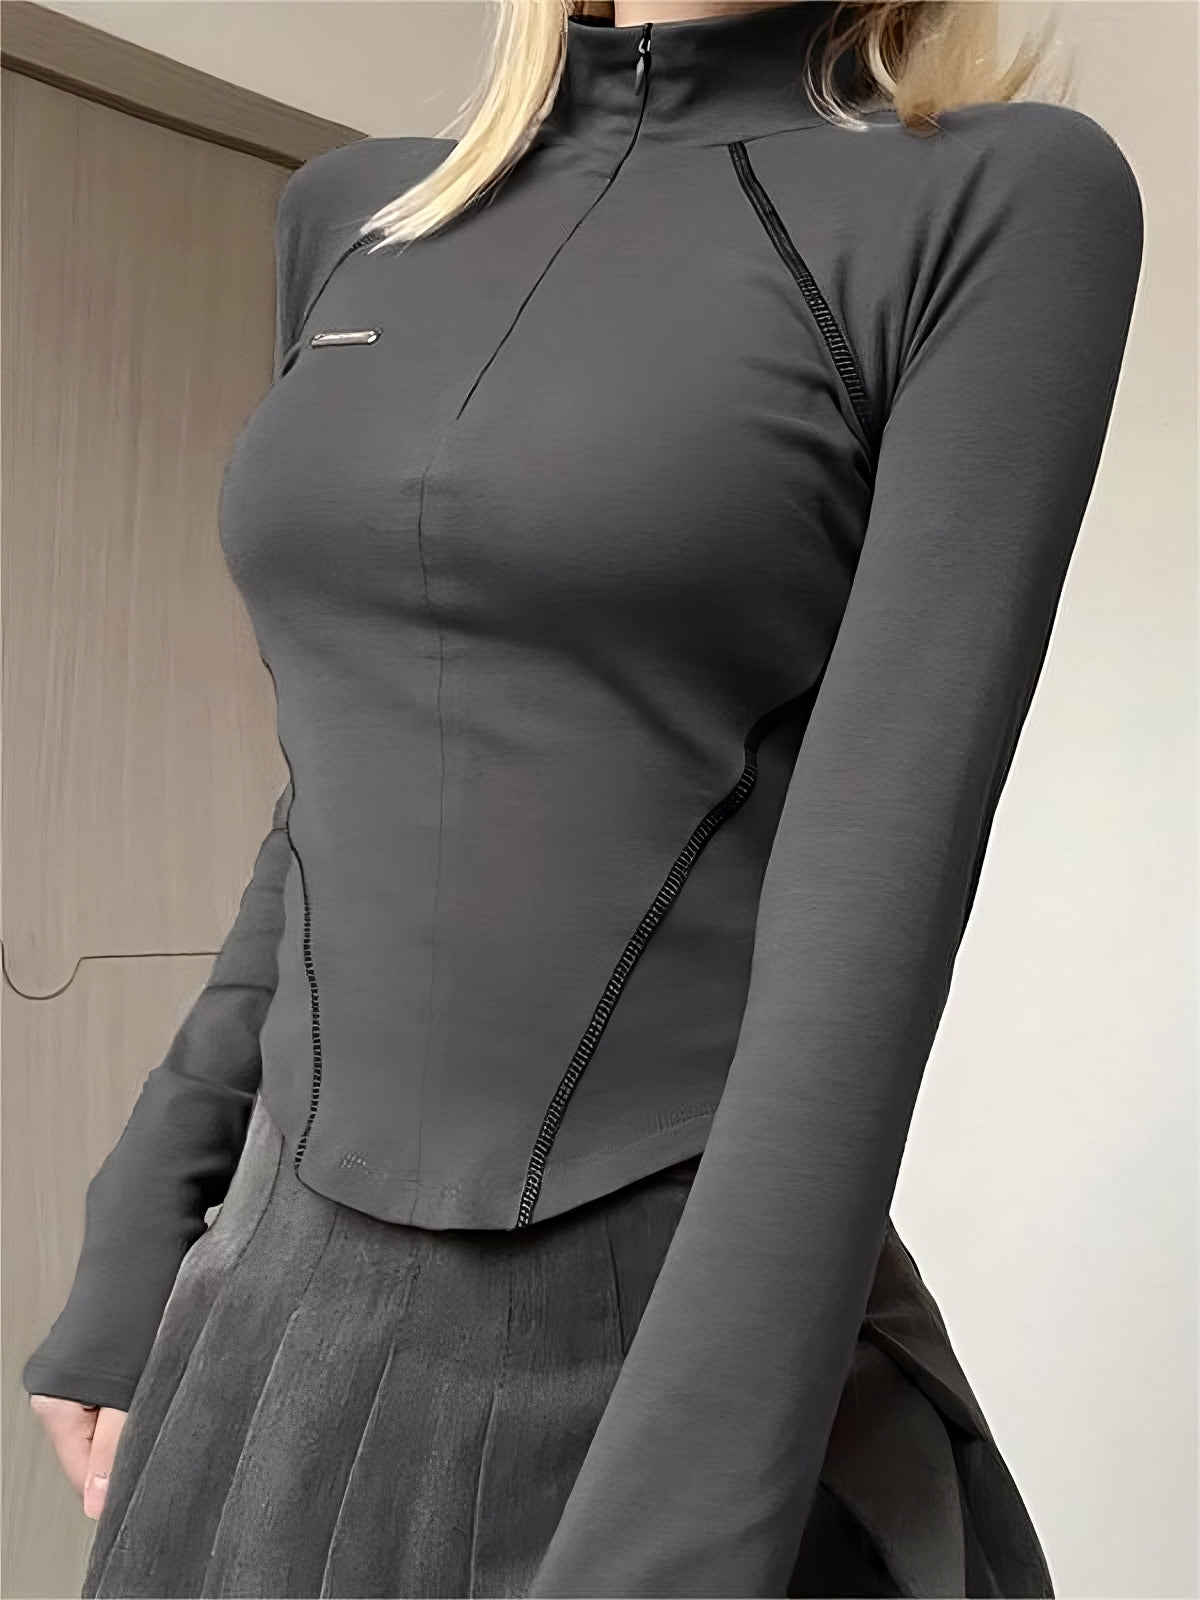 Cyberpunk long sleeve crop top with seam detail